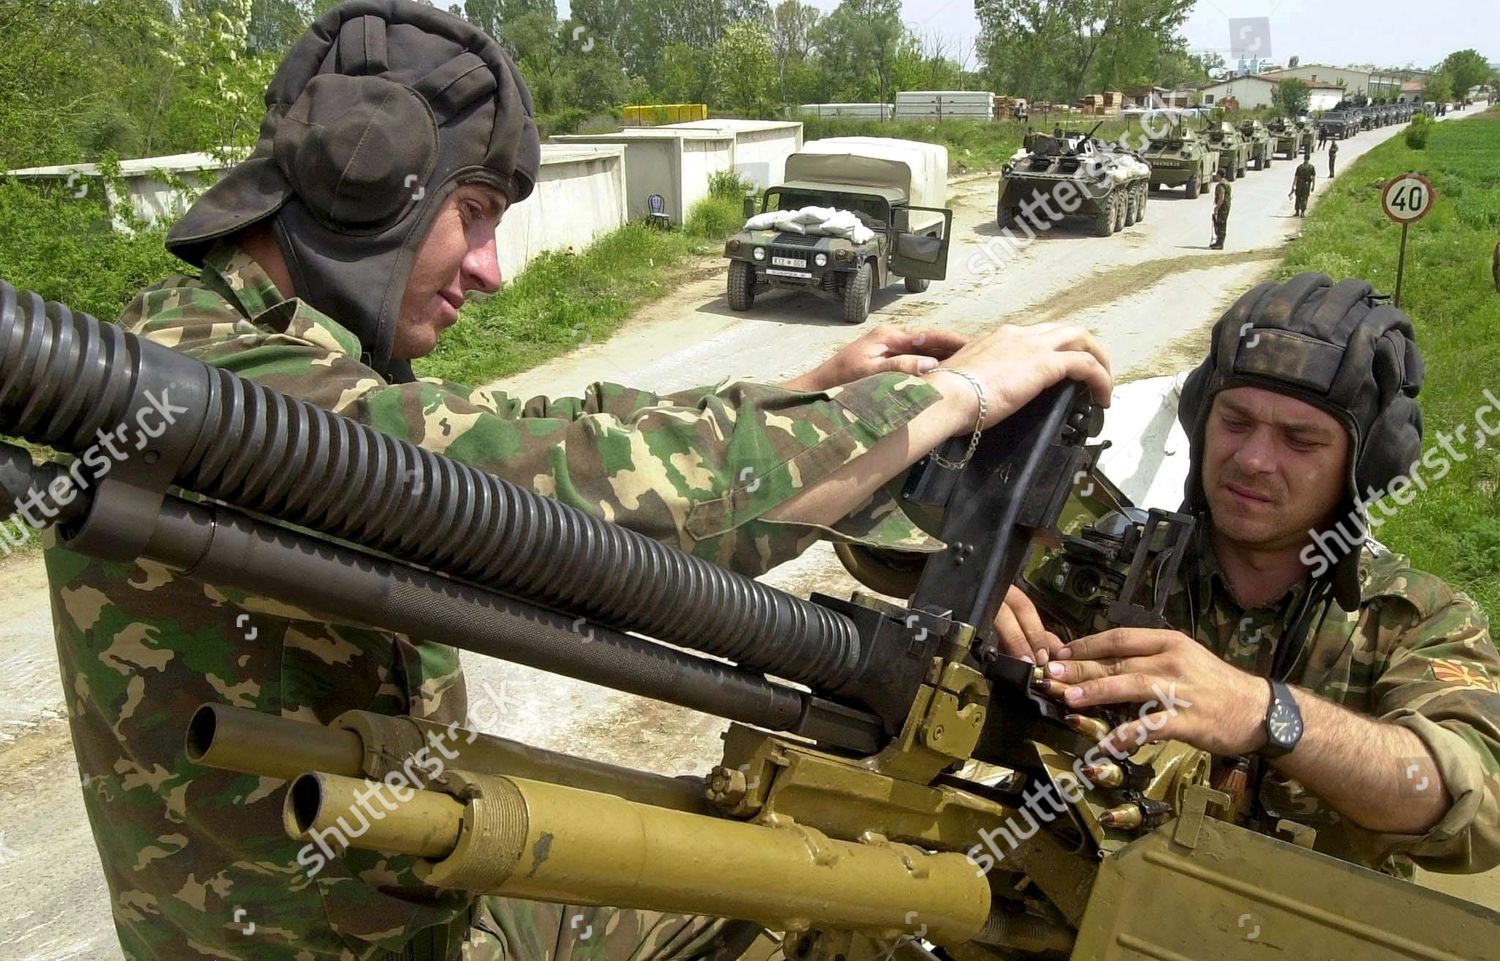 macedonia-soldiers-prepared-bullits-may-2001-shutterstock-editorial-8482357a.jpg